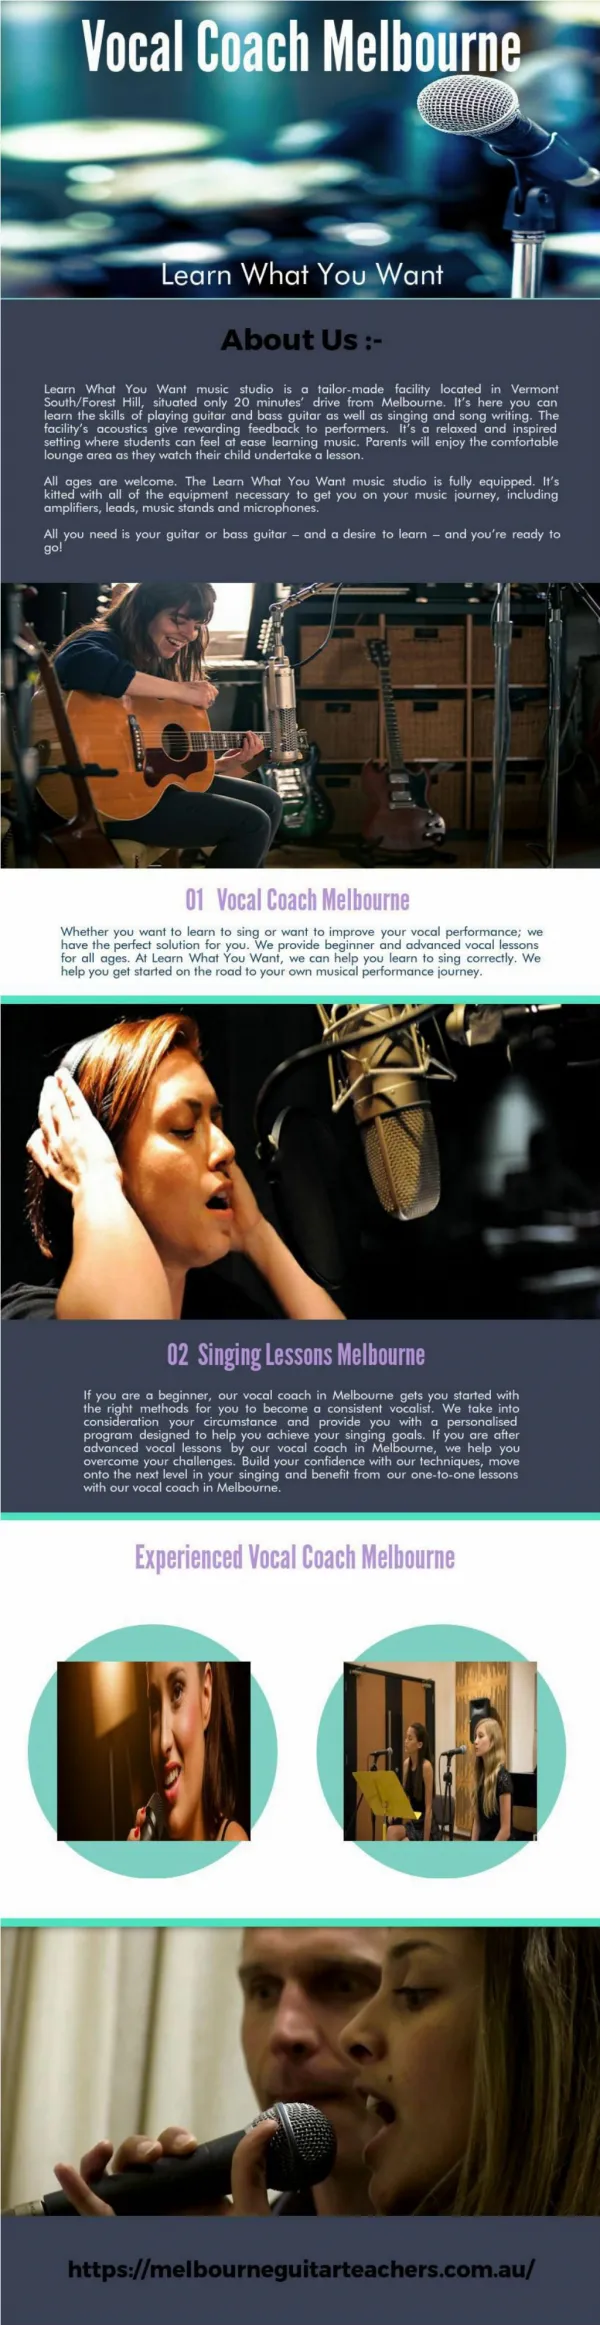 Experienced Vocal Coach Melbourne